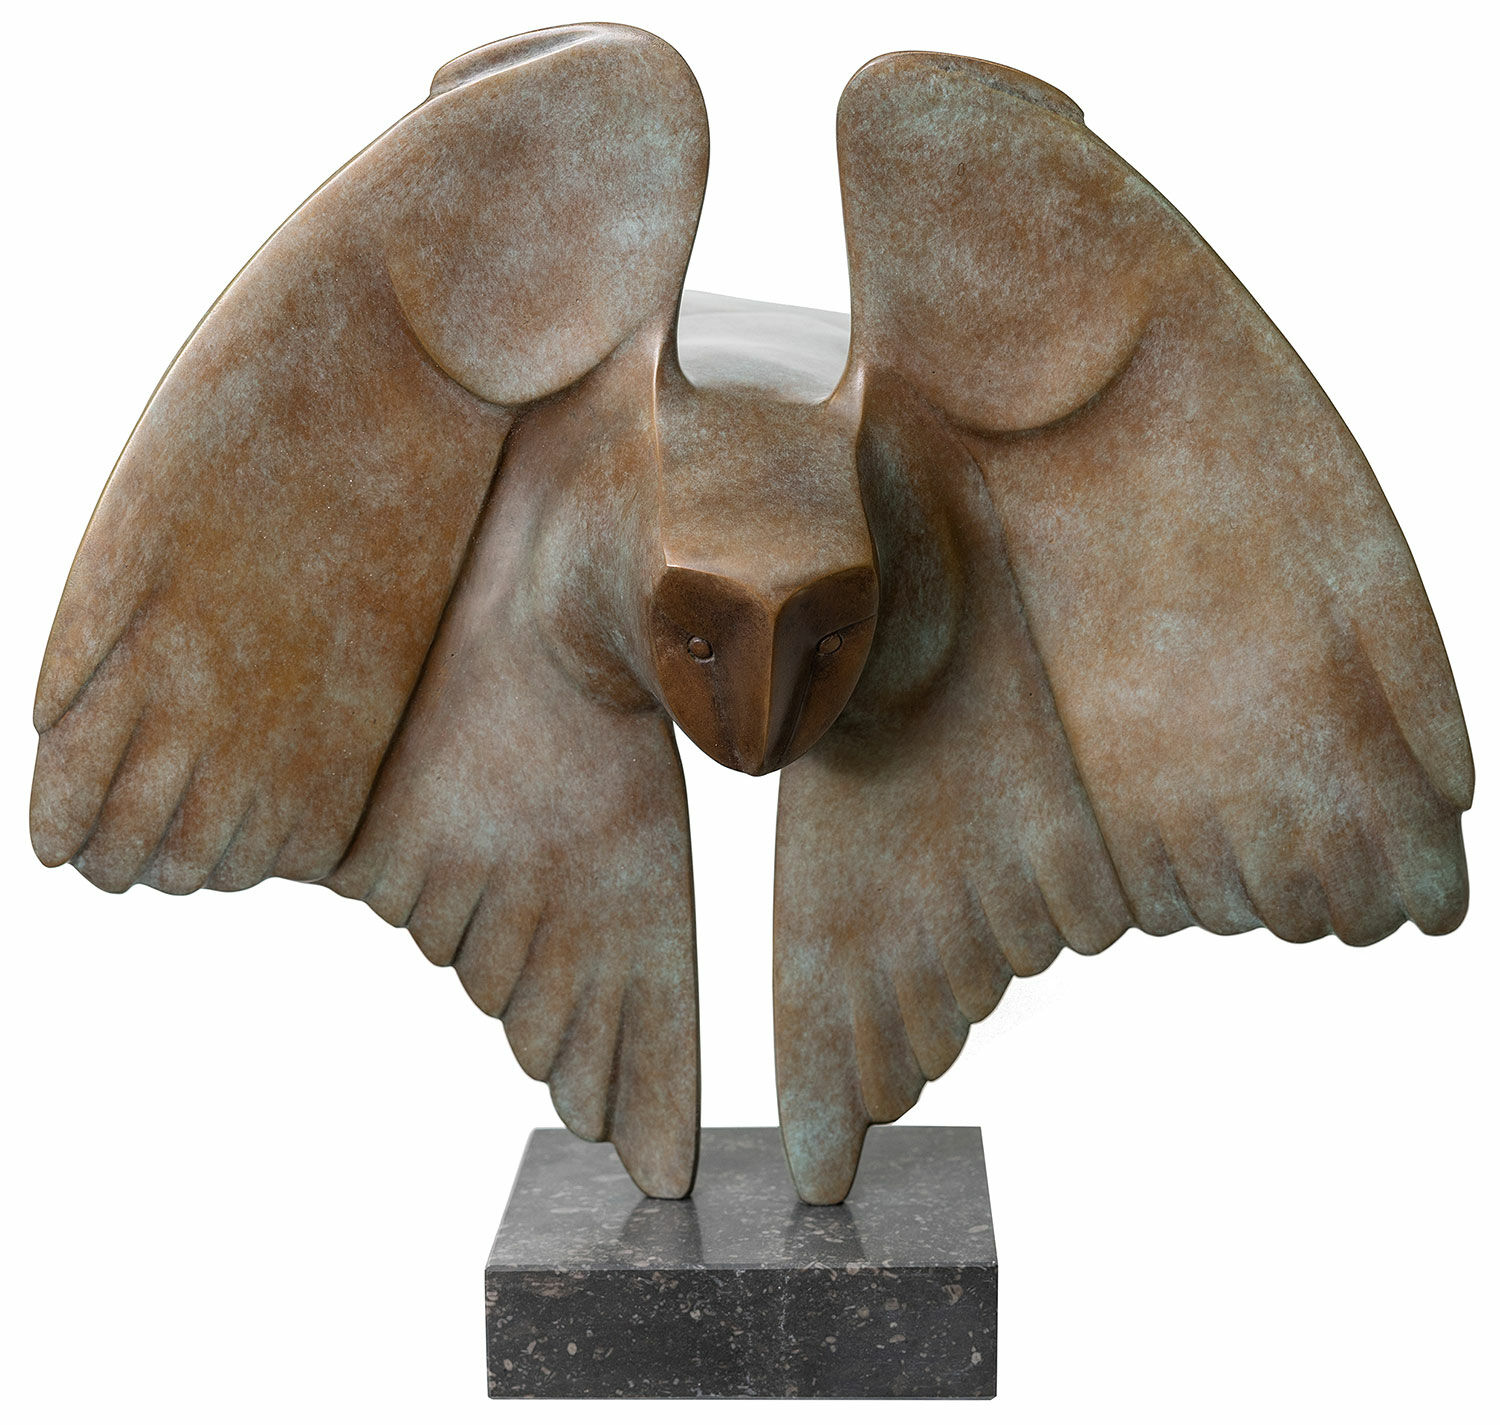 Skulptur "Fliegende Eule No. 7", Bronze von Evert den Hartog